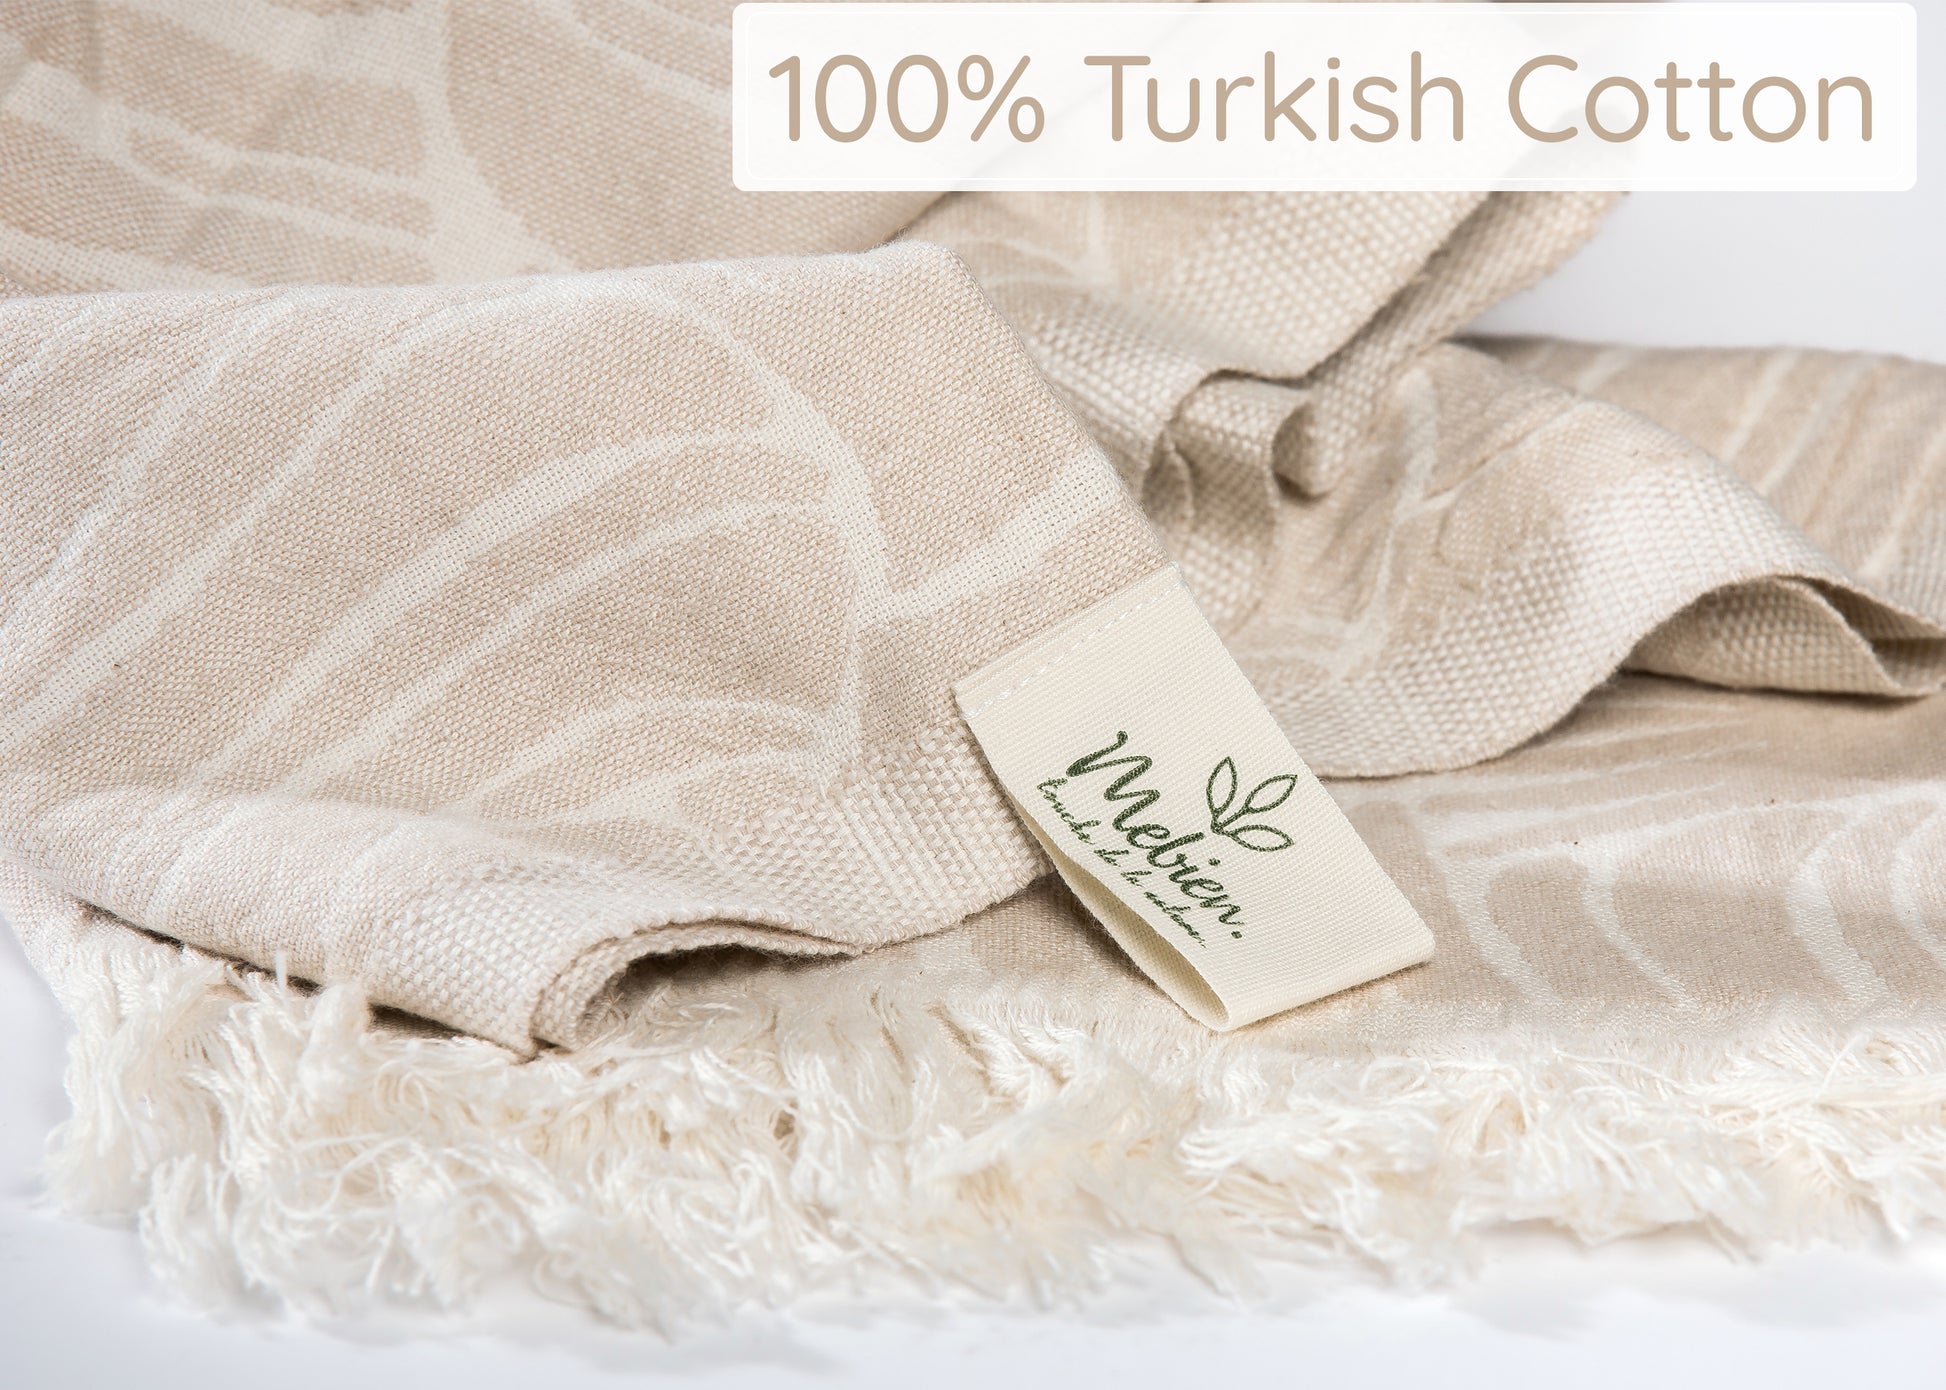 100% Turkish Cotton Towels